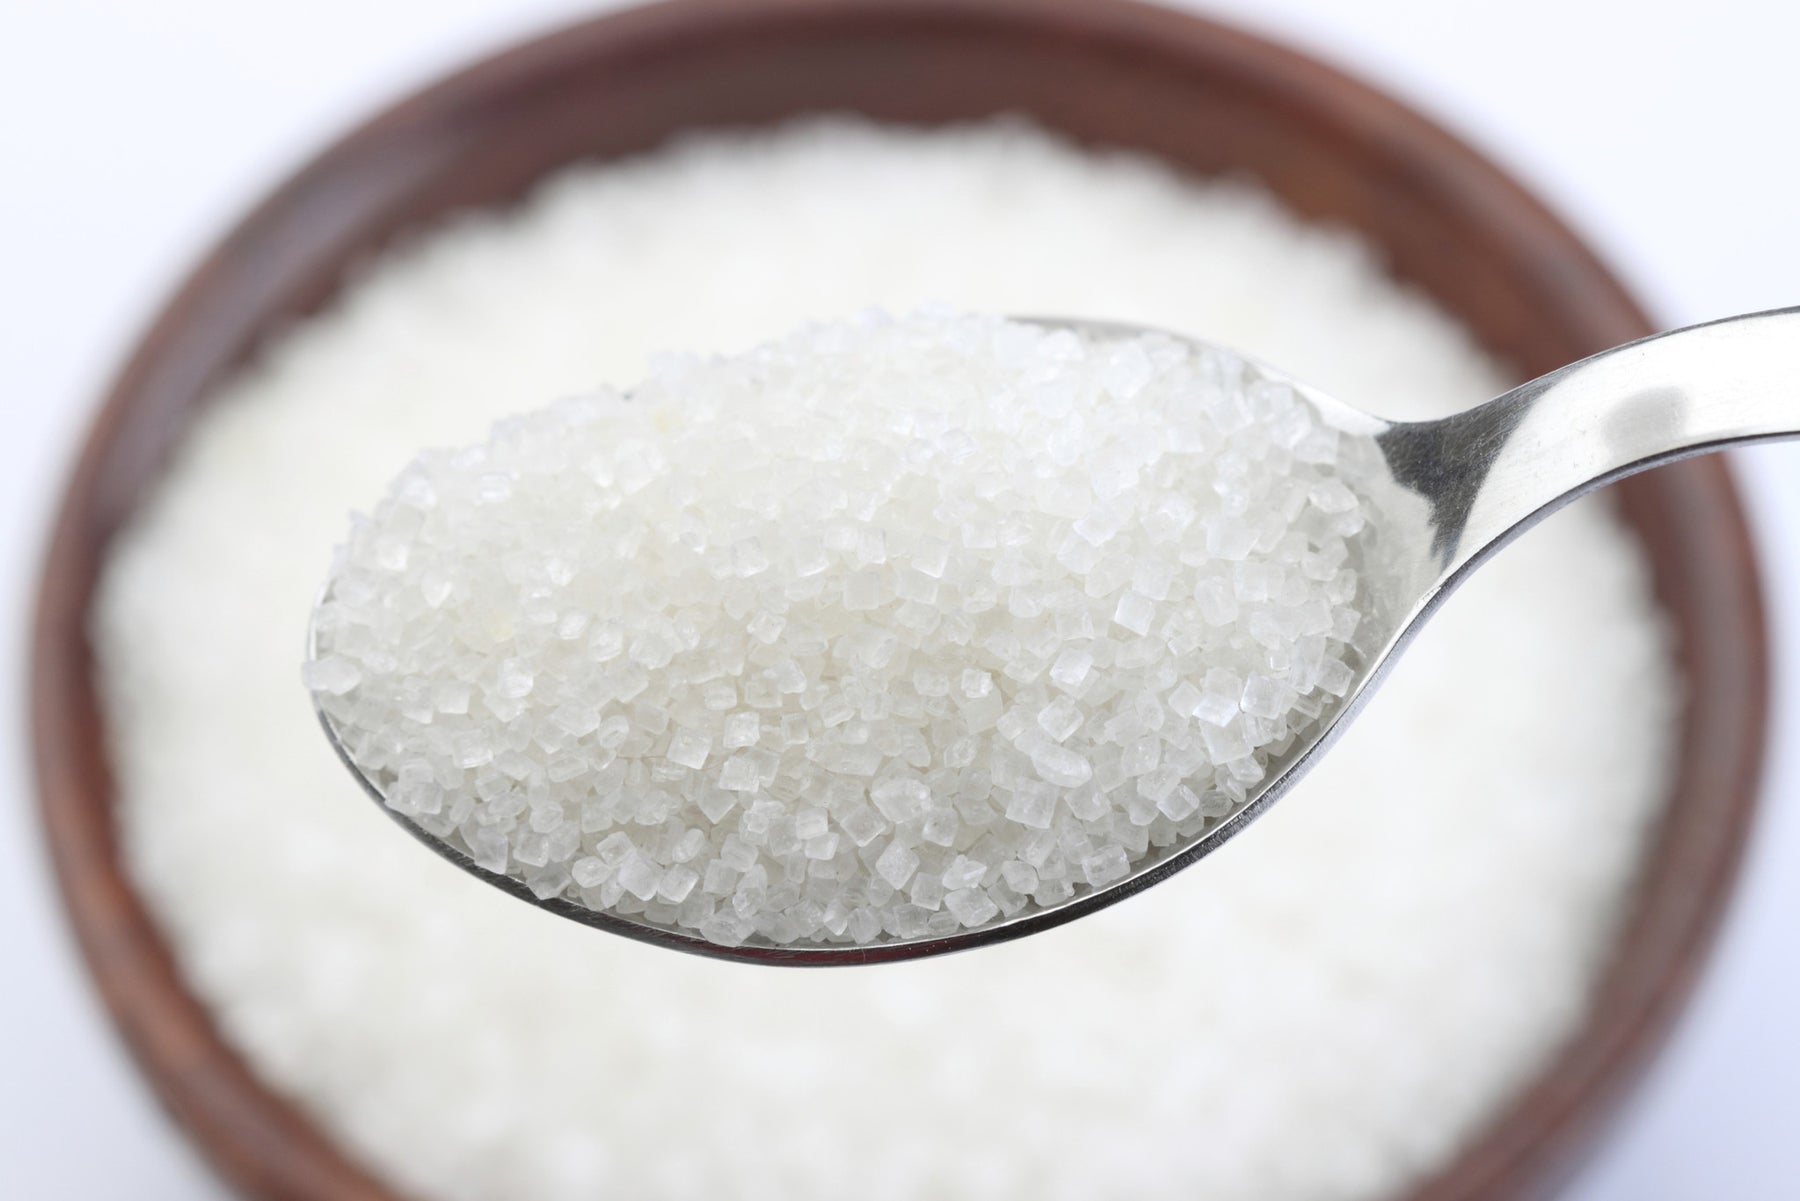 146 Reasons Why Sugar Ruins Your Health